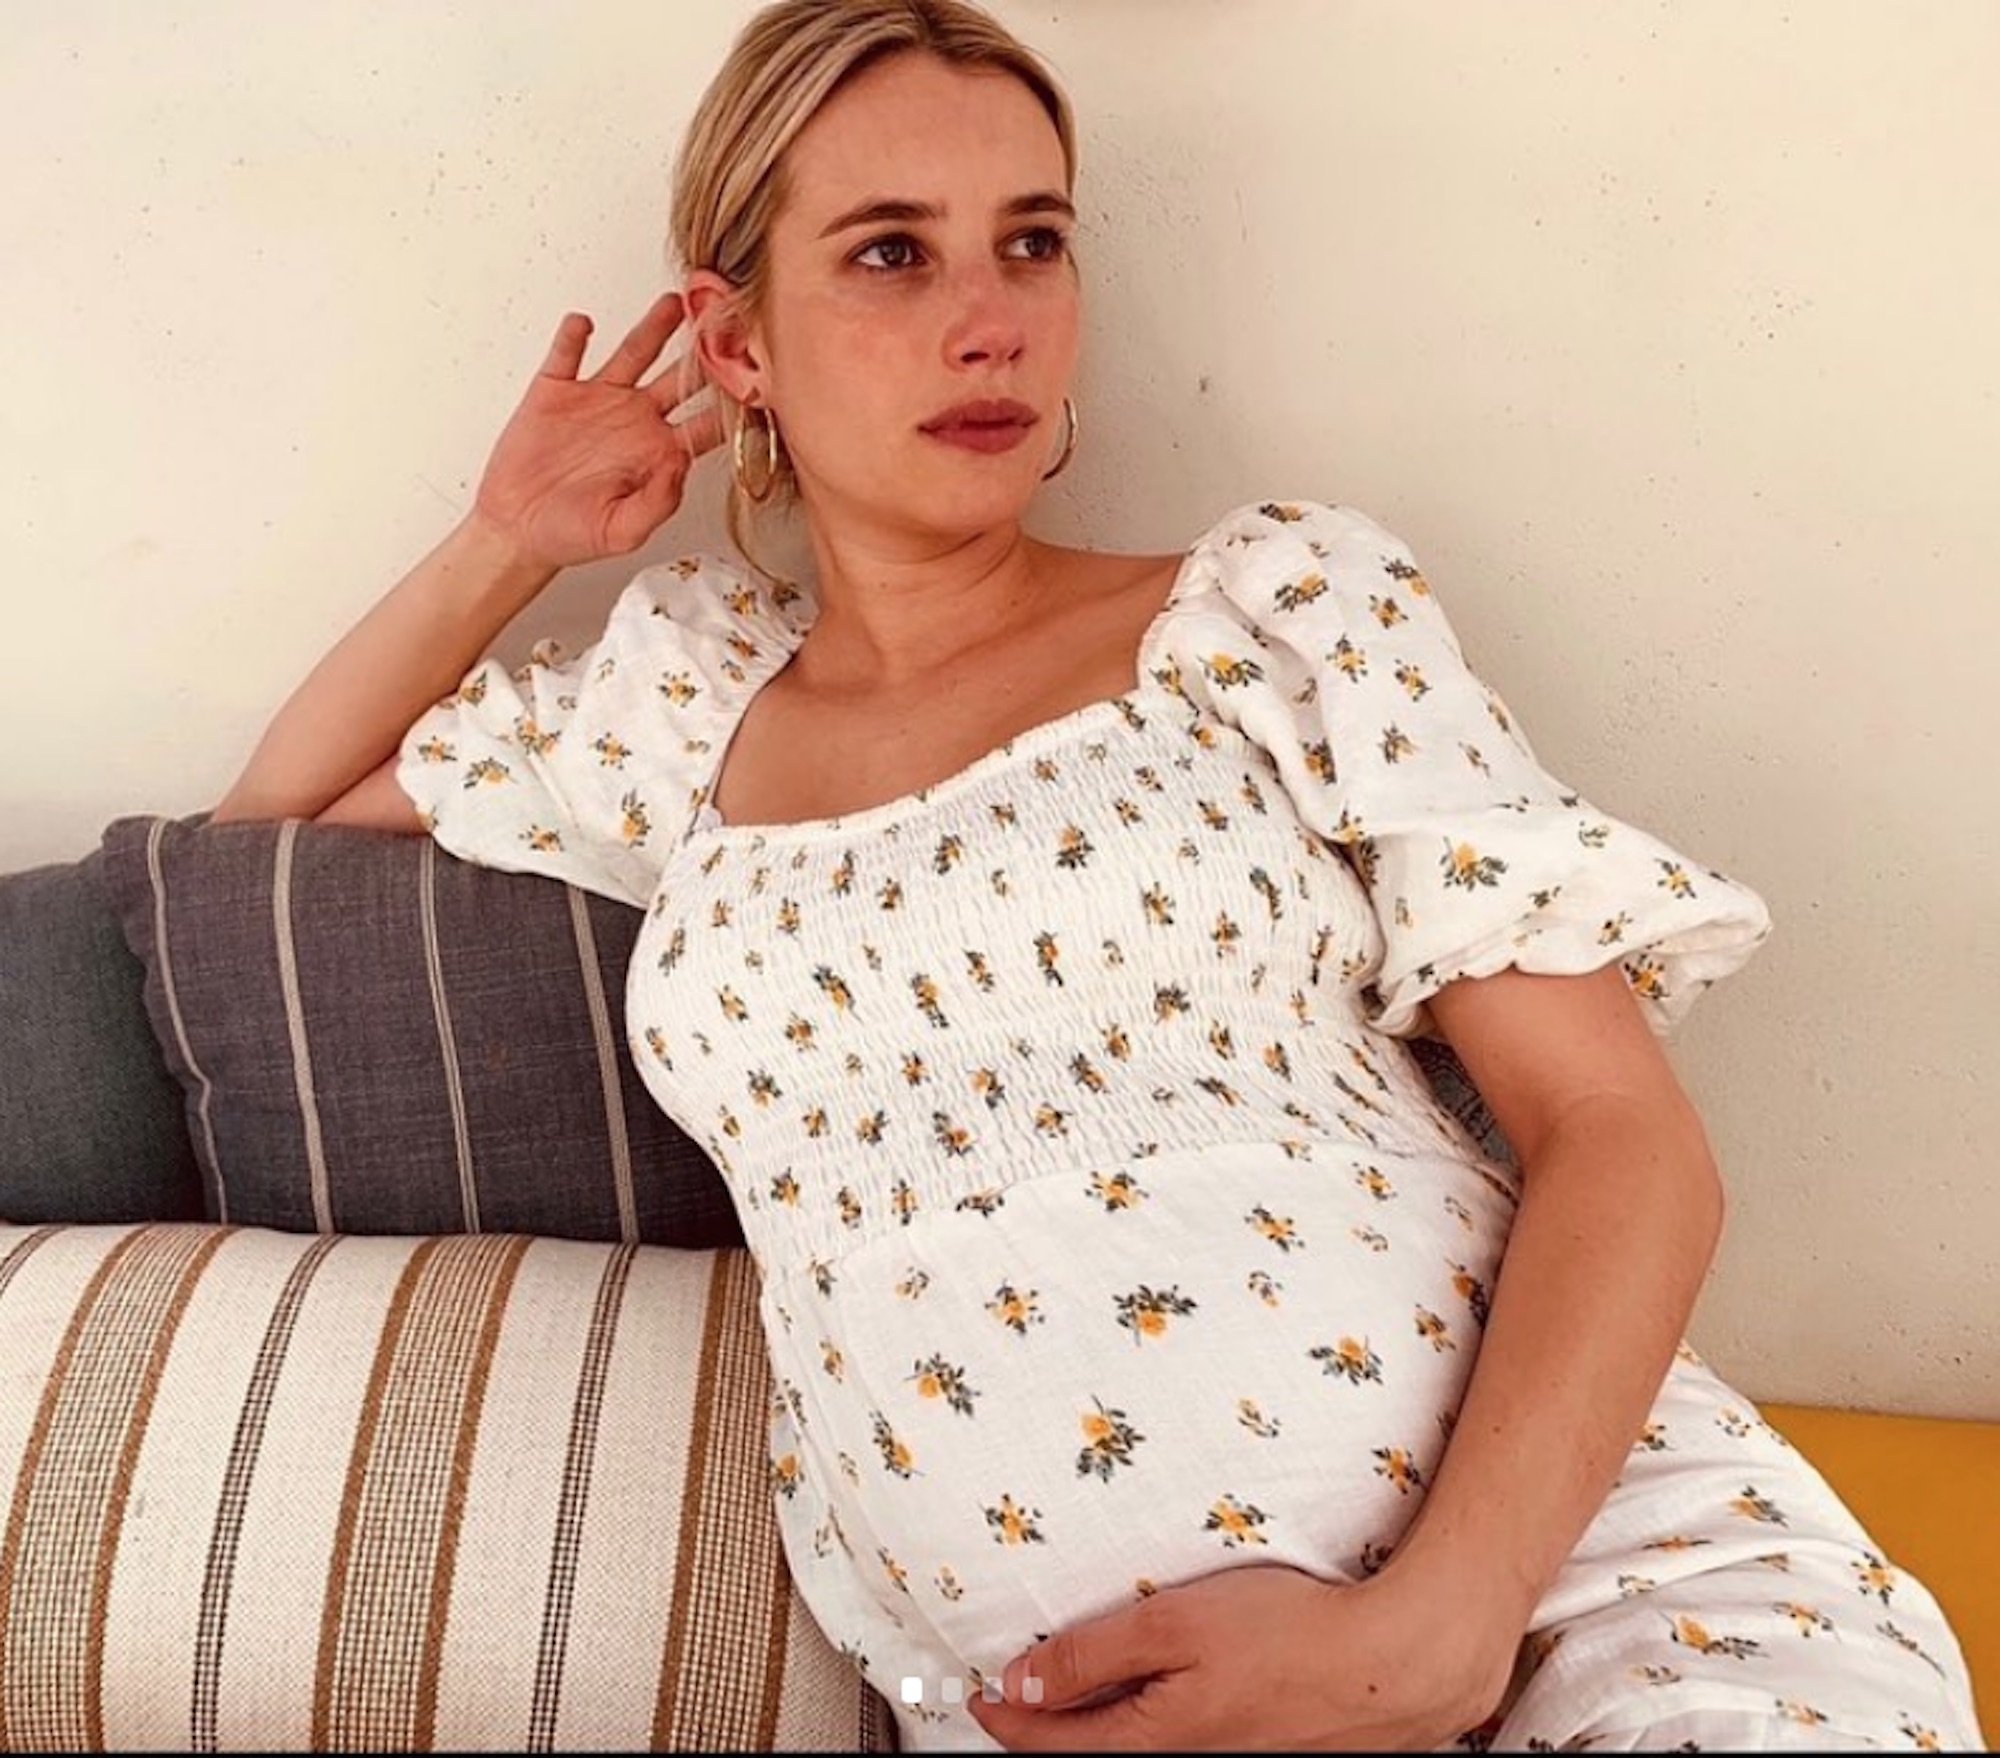 Emma Roberts - Emma Roberts Baby Bump Photos: See the Pregnant Actress!